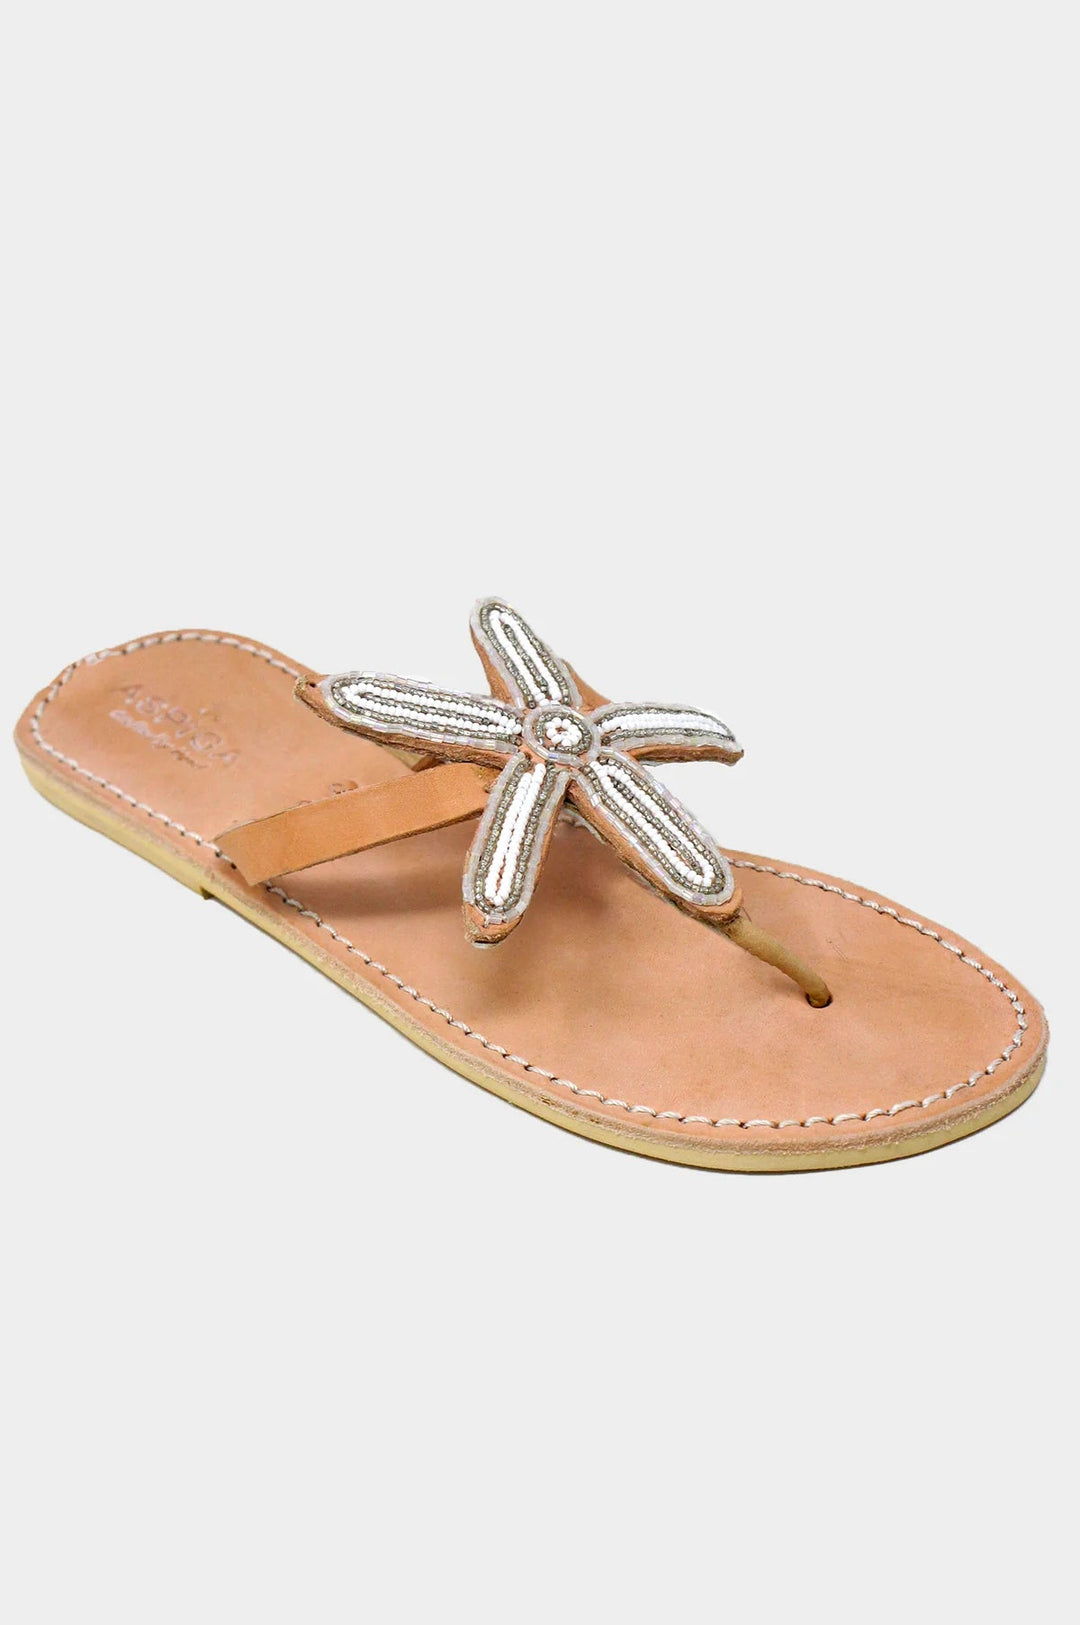 Flower Star Leather Sandals by Aspiga Flower Star Sandals Aspiga White/Silver 36 